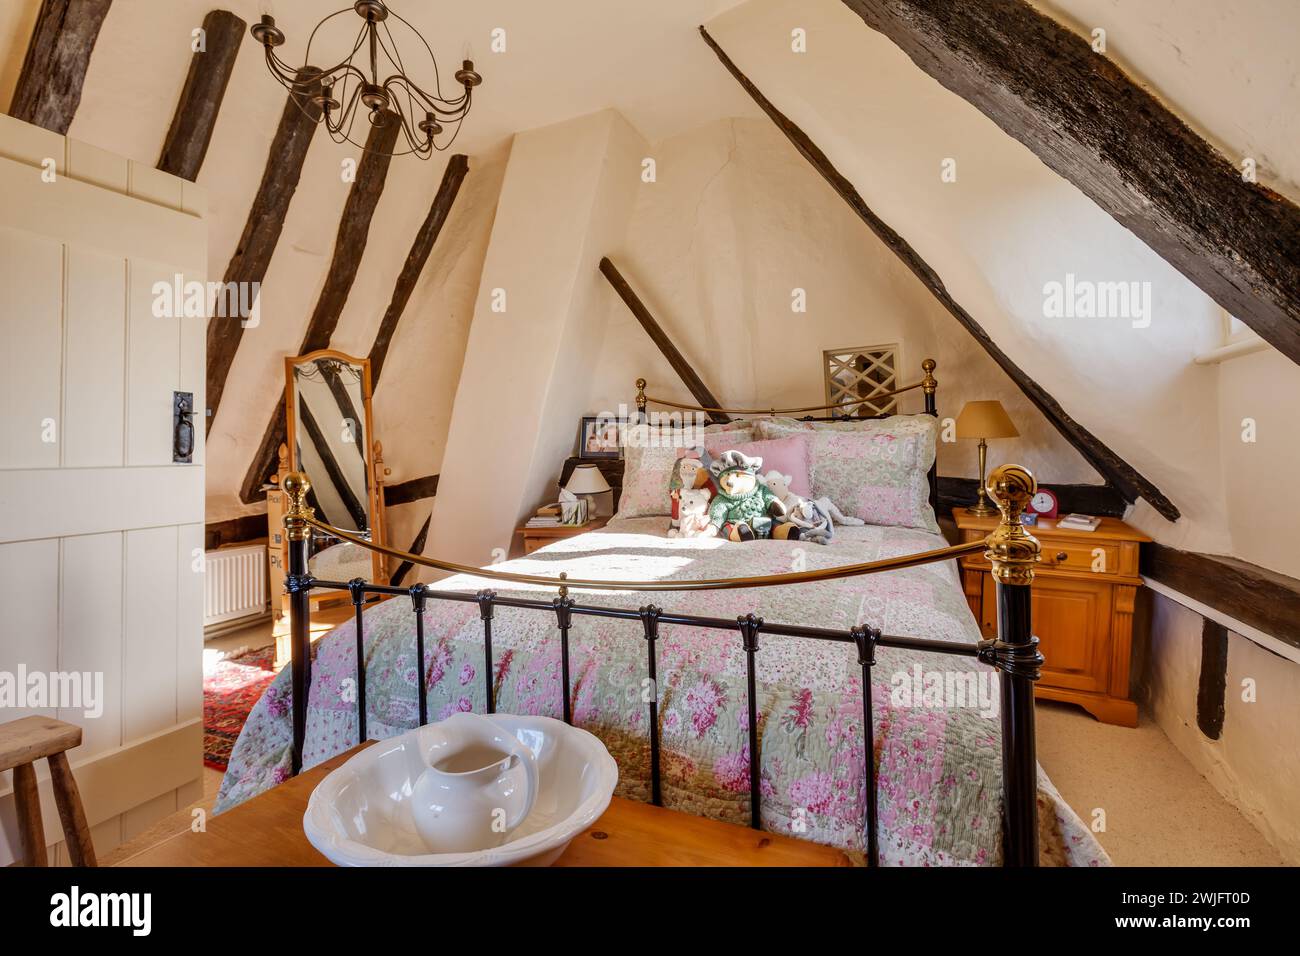 Dalham, Suffolk, England - Feb 19 2016: 16th Century english attic style cottage bedroom Stock Photo